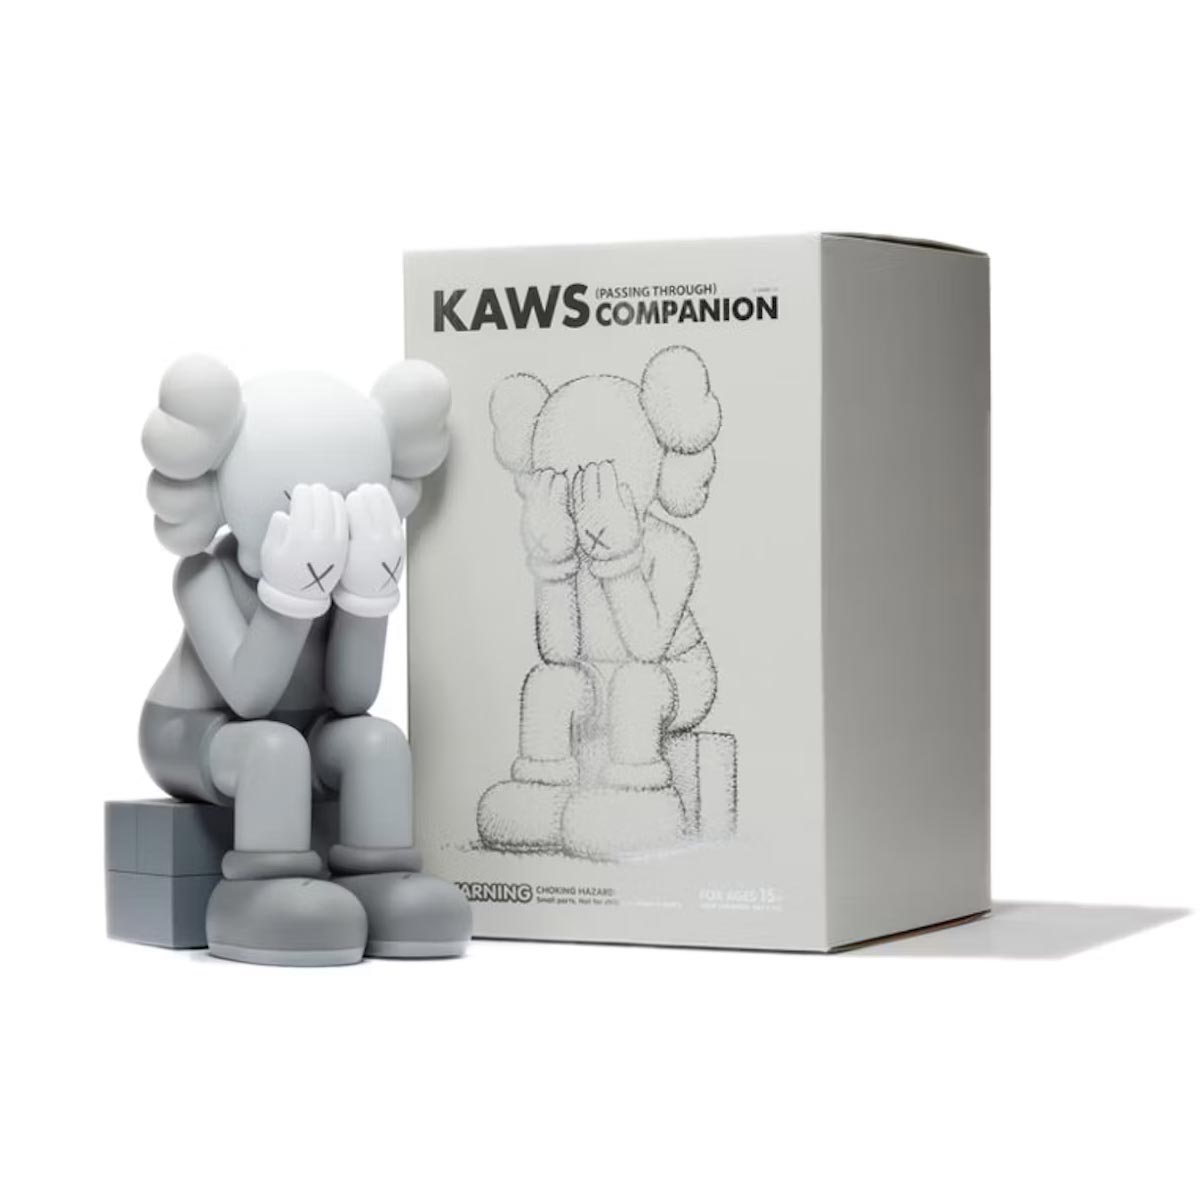 цена Виниловая фигурка Kaws Passing Through Companion (2013), серый